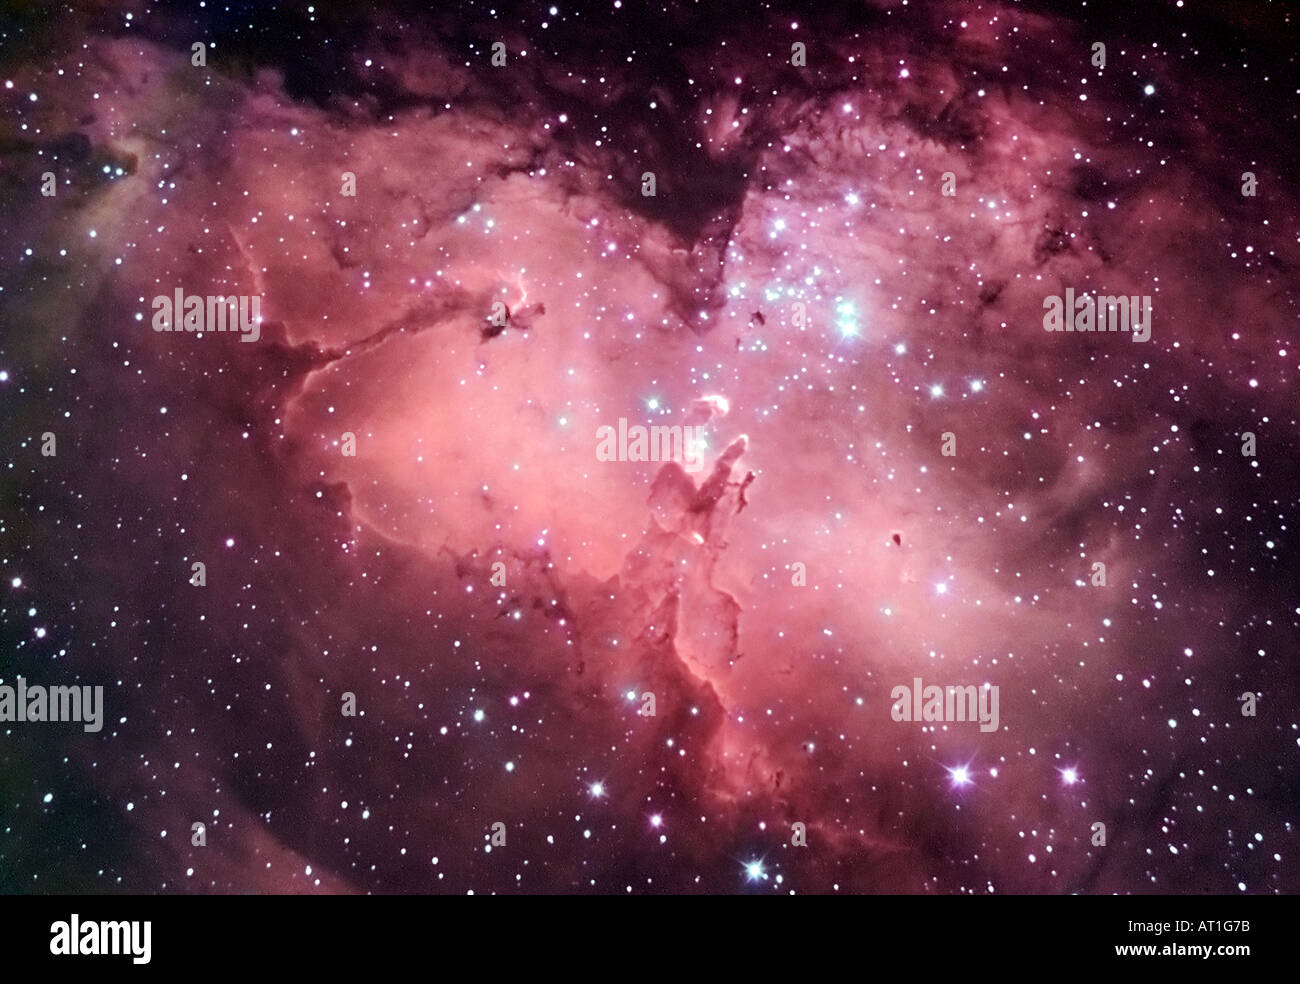 m16-eagle-nebula-in-snake-constellation-